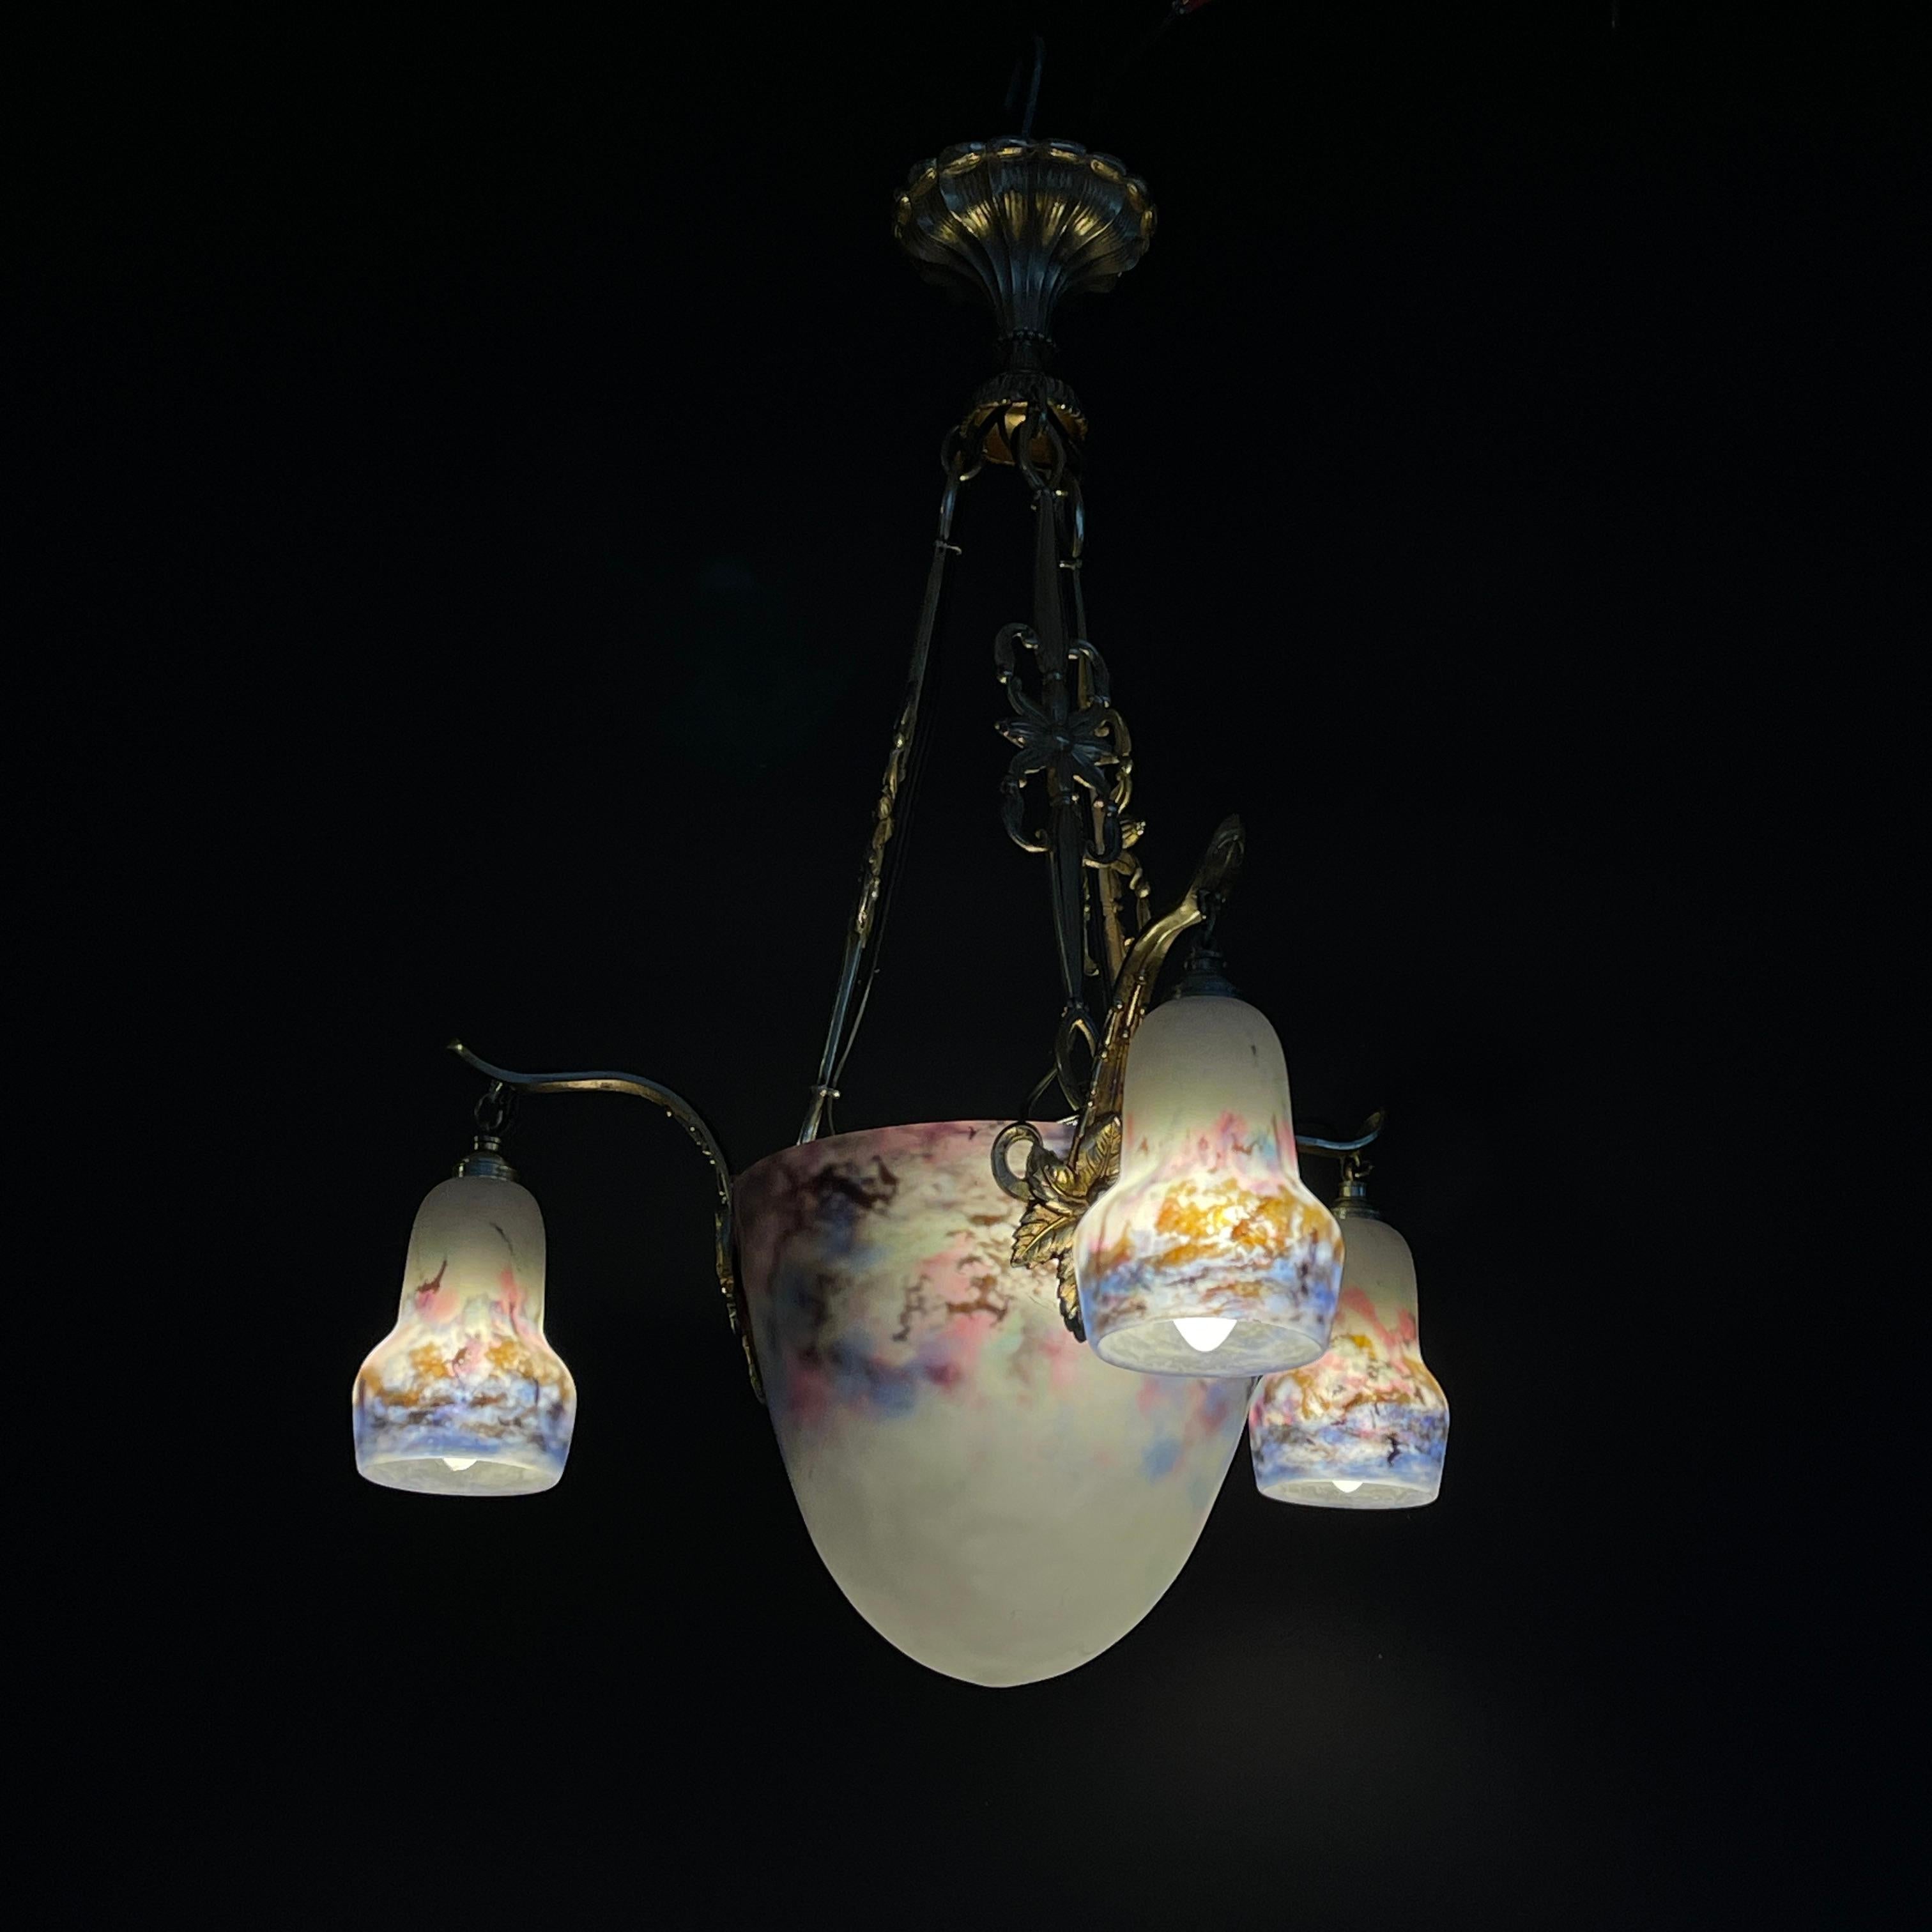 ART DECO chandelier pate de verre by Muller Fres & Bronze by Petitot, 1930s For Sale 3